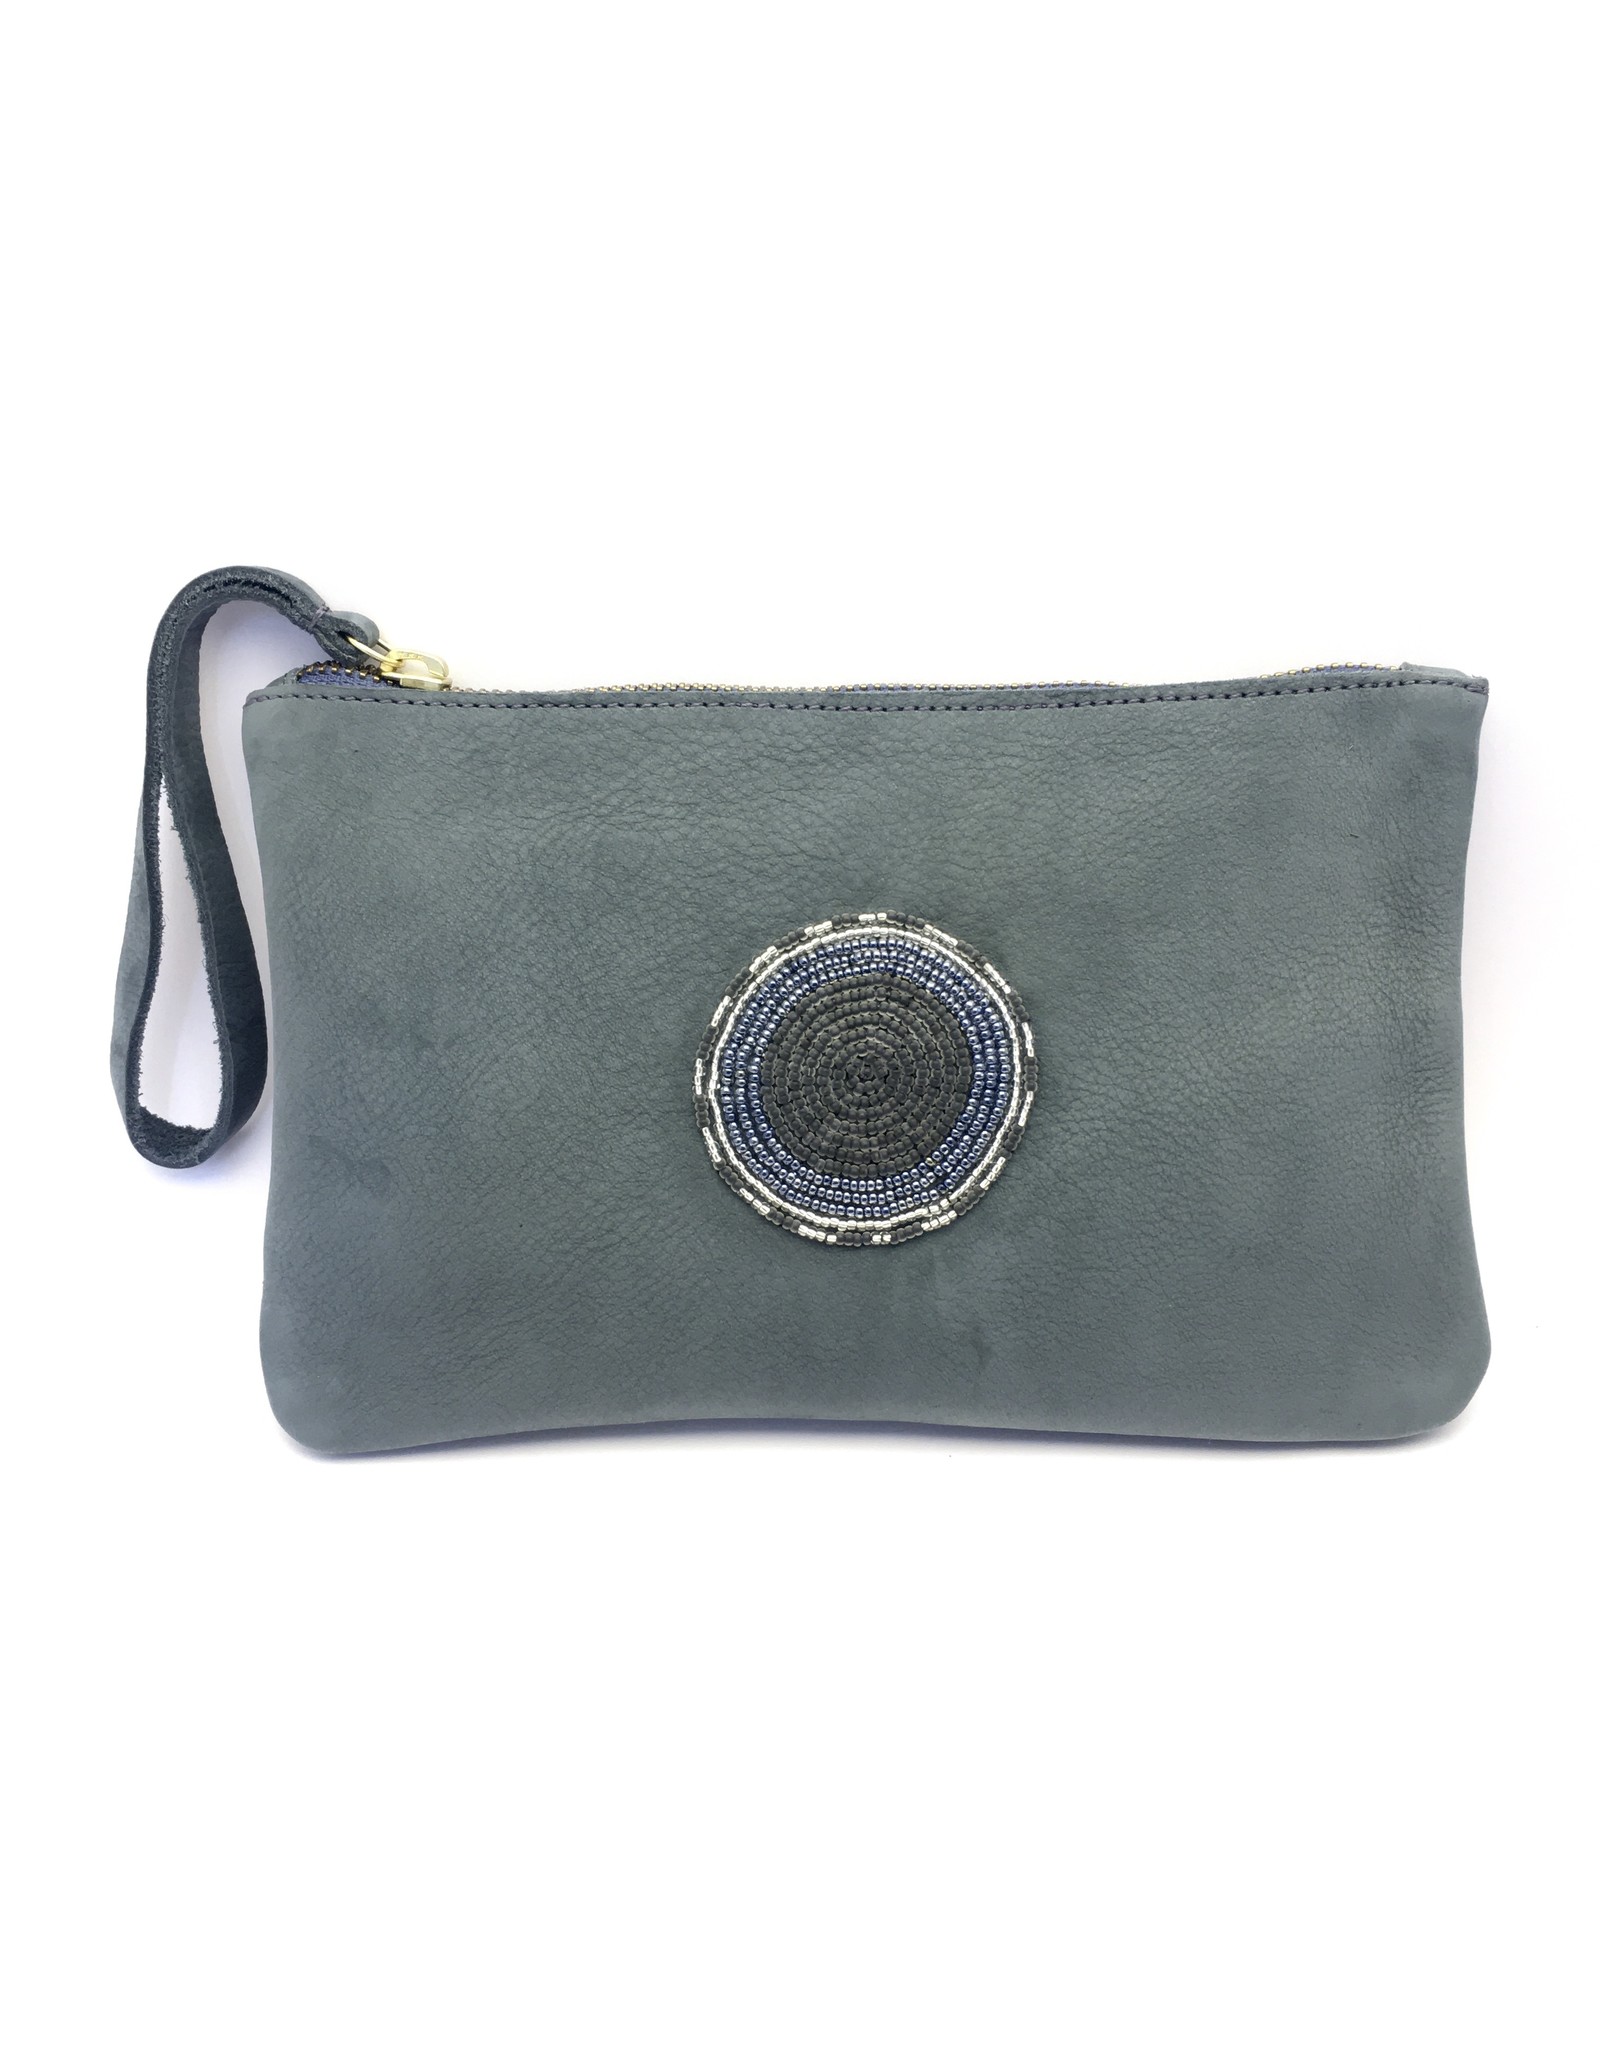 Maisha.Style Laikia purse - mouse grey suede purse with disc of tone on tone beads